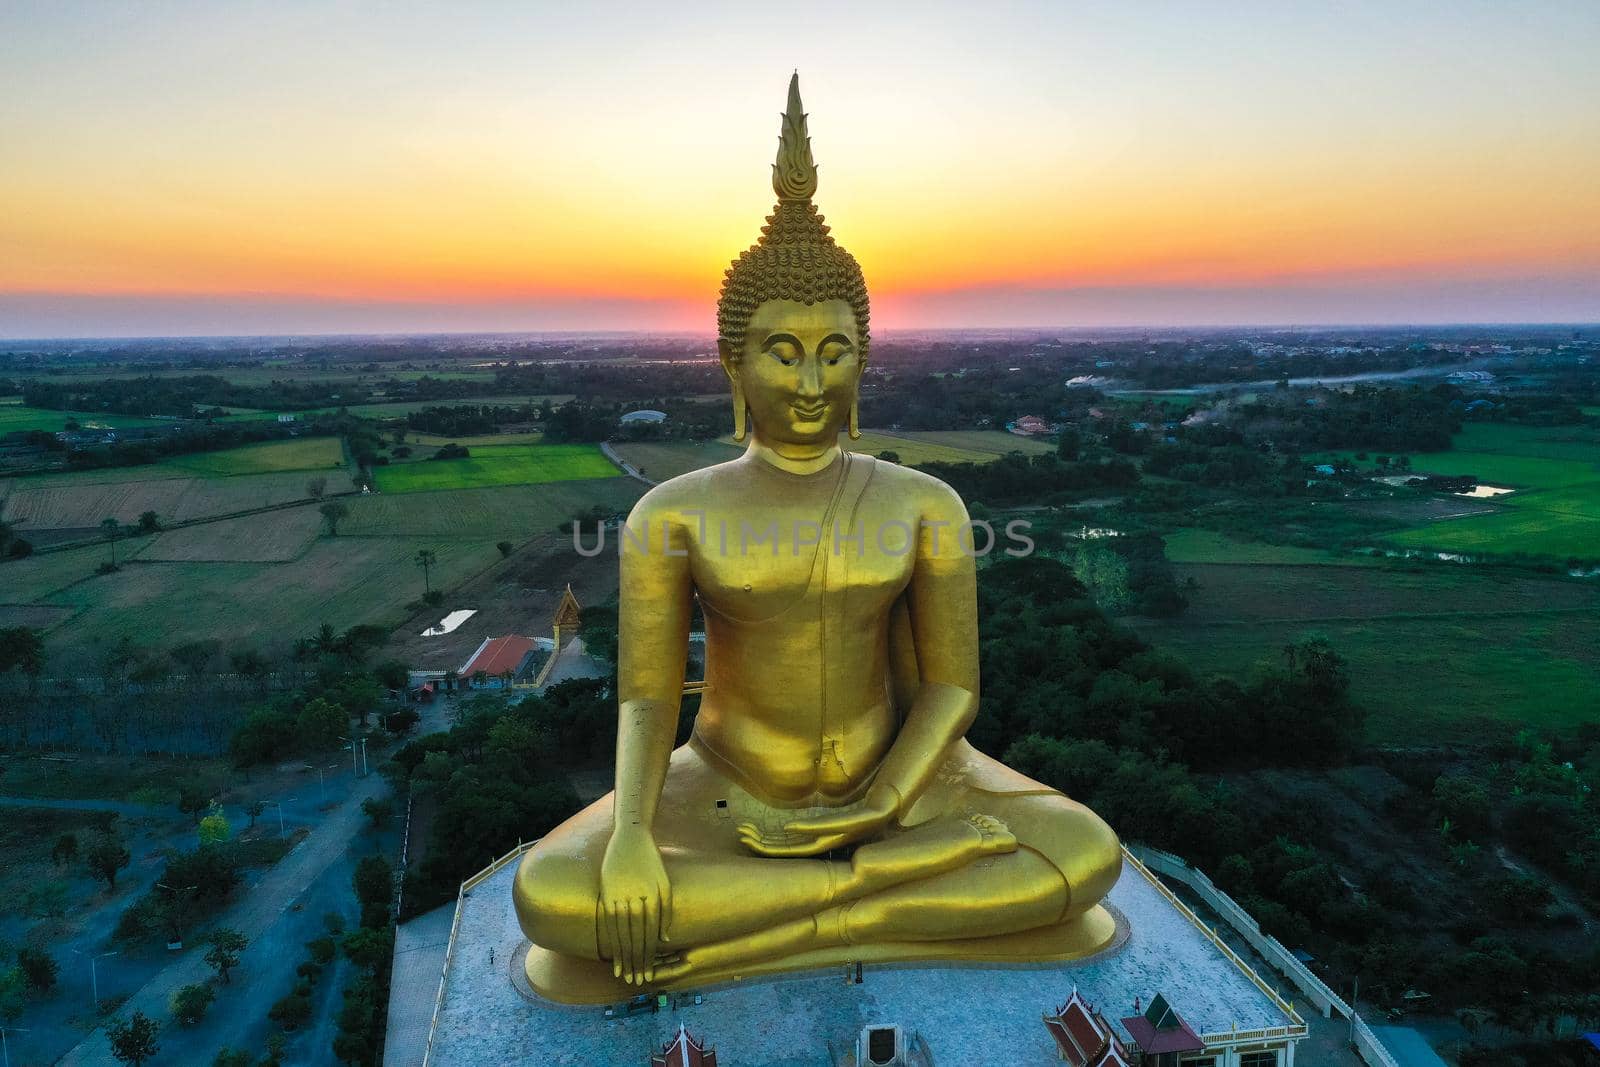 Big Buddha during sunset at Wat Muang in Ang Thong, Thailand, south east asia